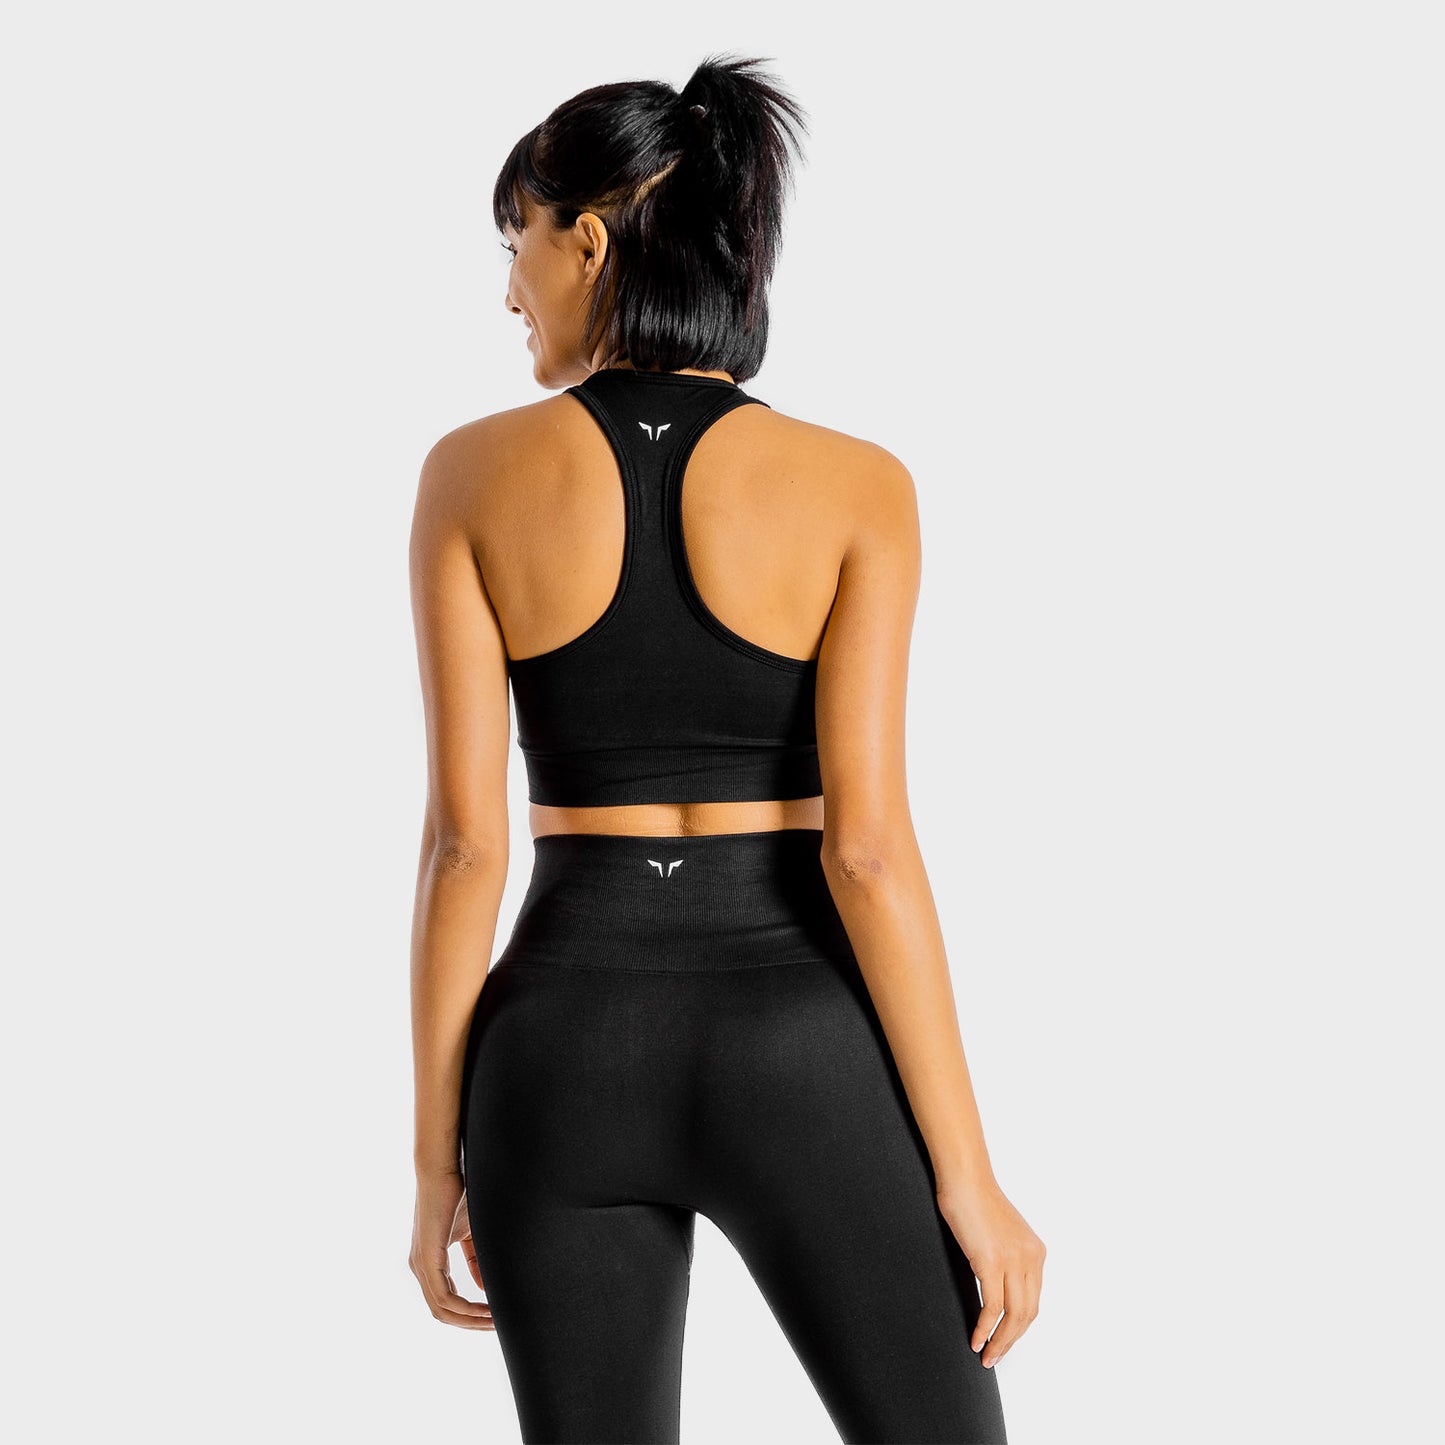 squatwolf-workout-clothes-primal-bra-black-sports-bra-for-gym